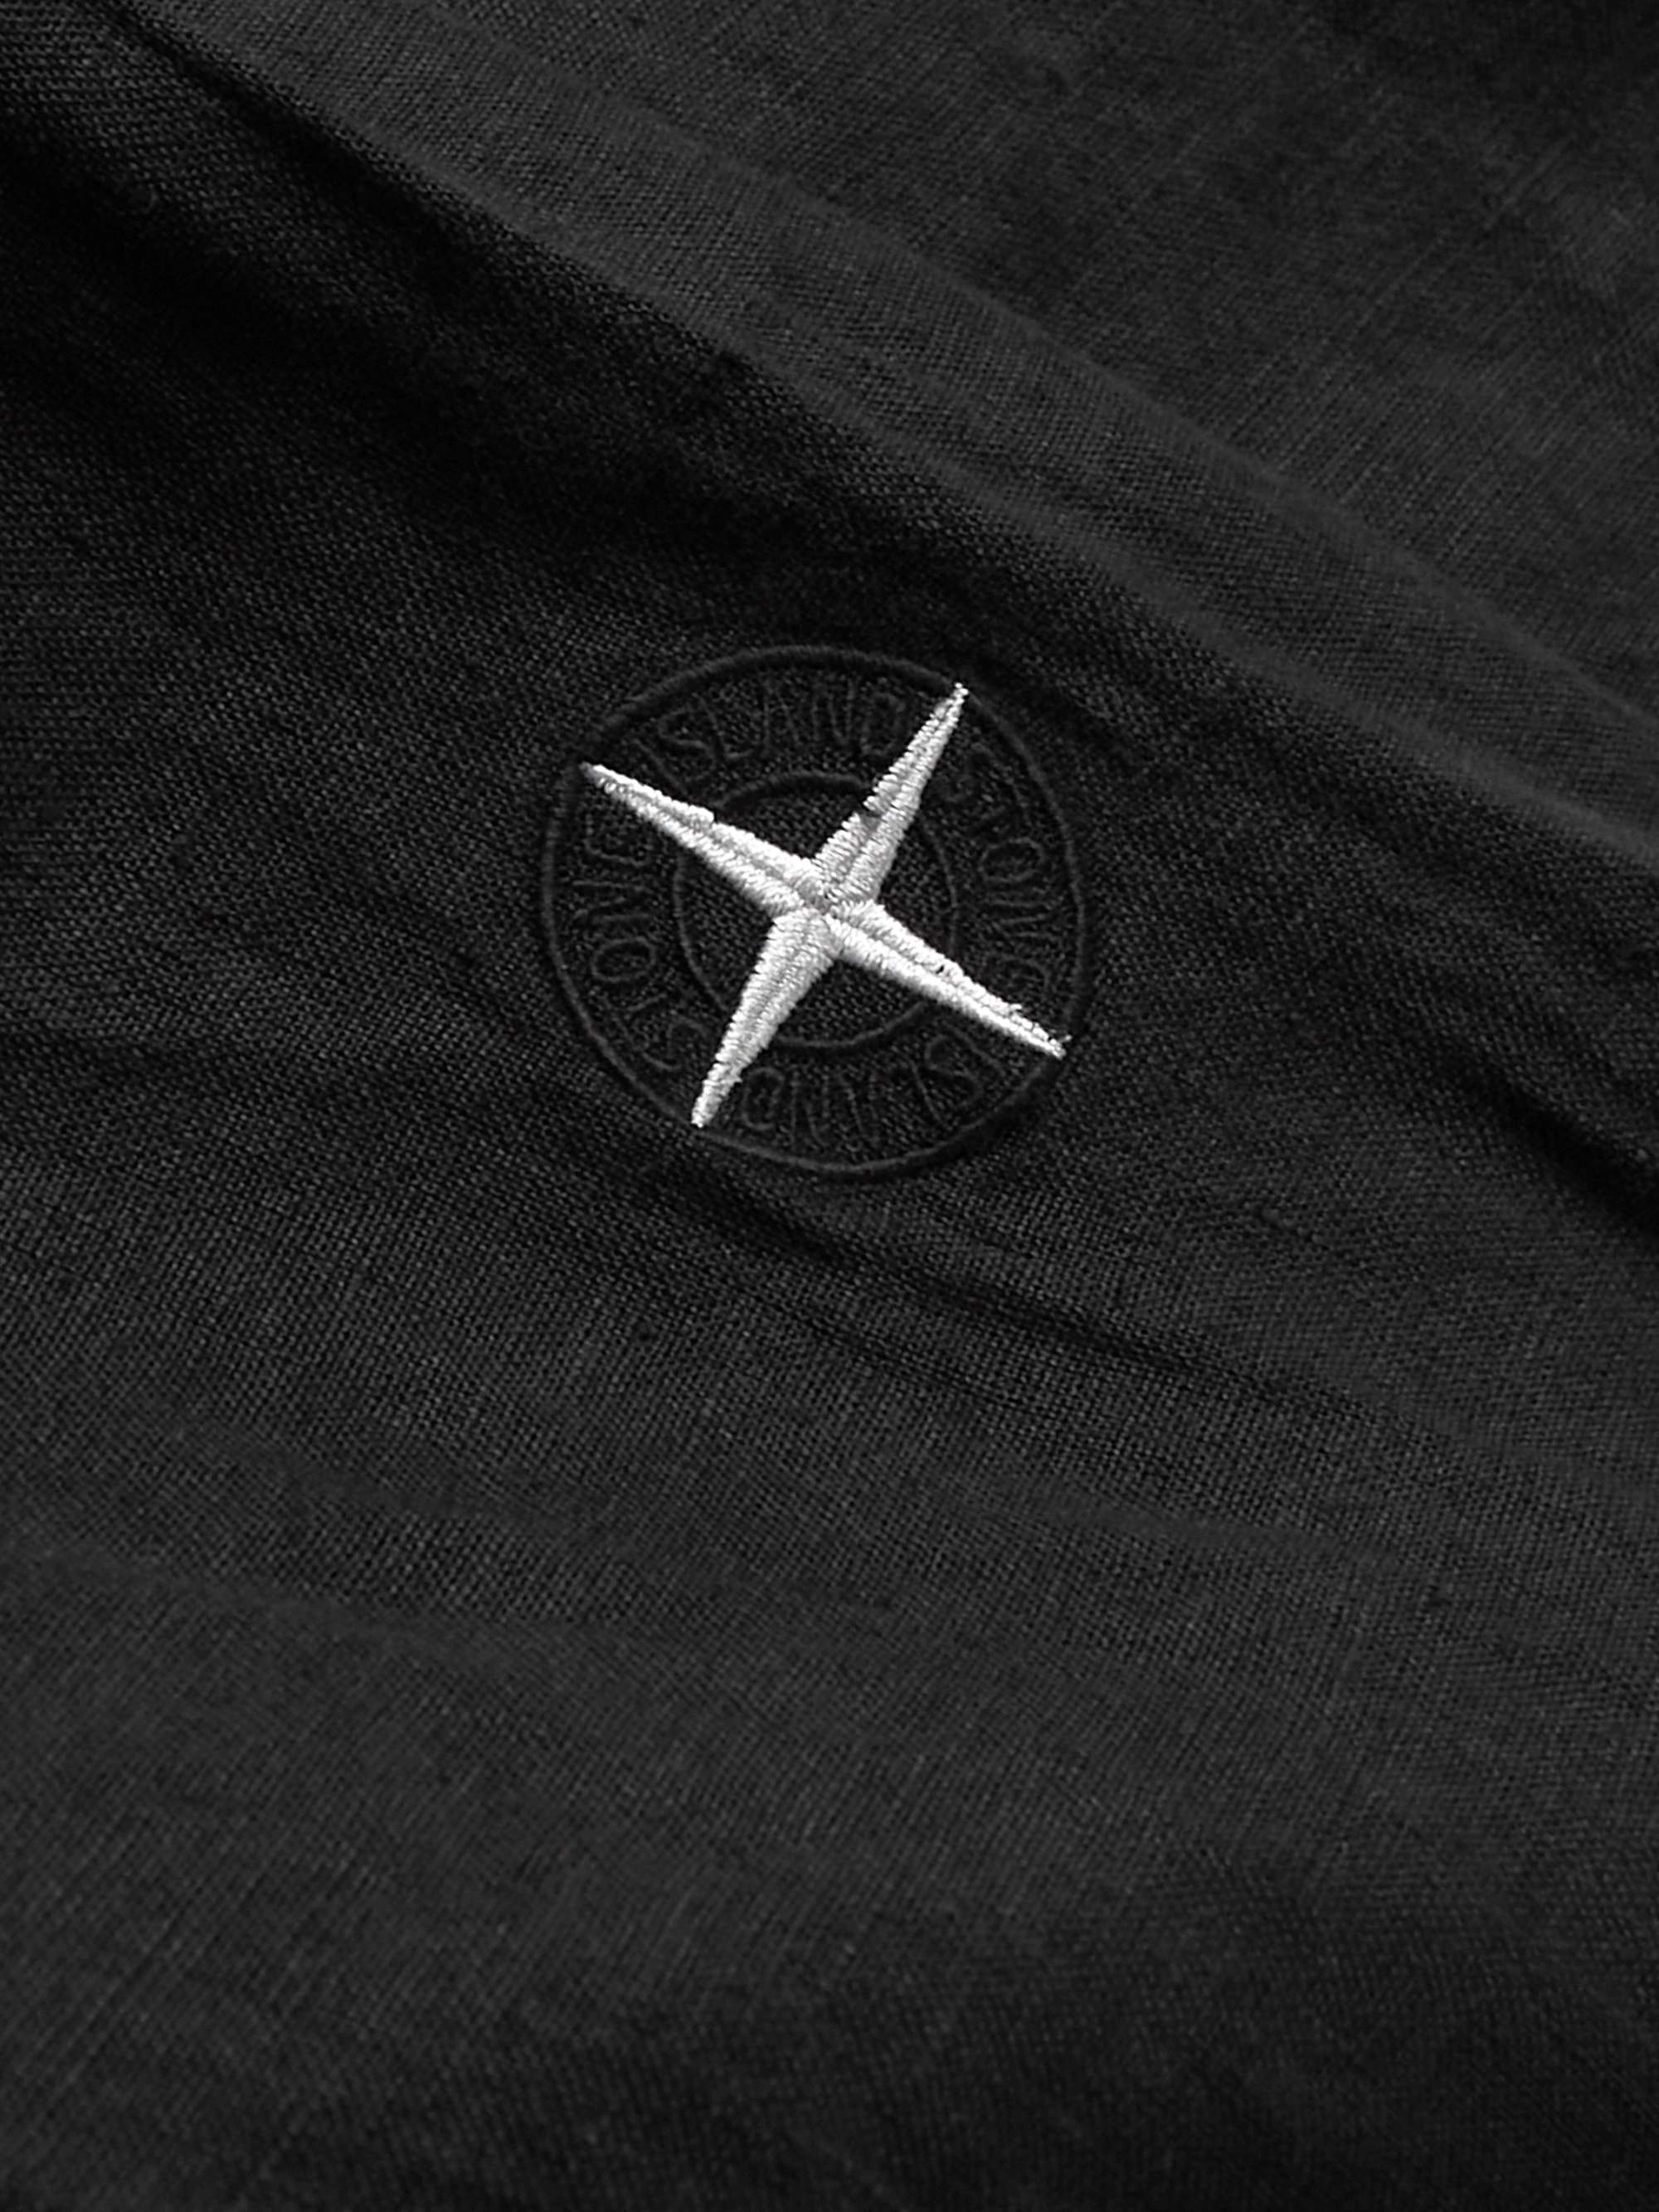 STONE ISLAND Logo-Embroidered Garment-Dyed Linen Shirt